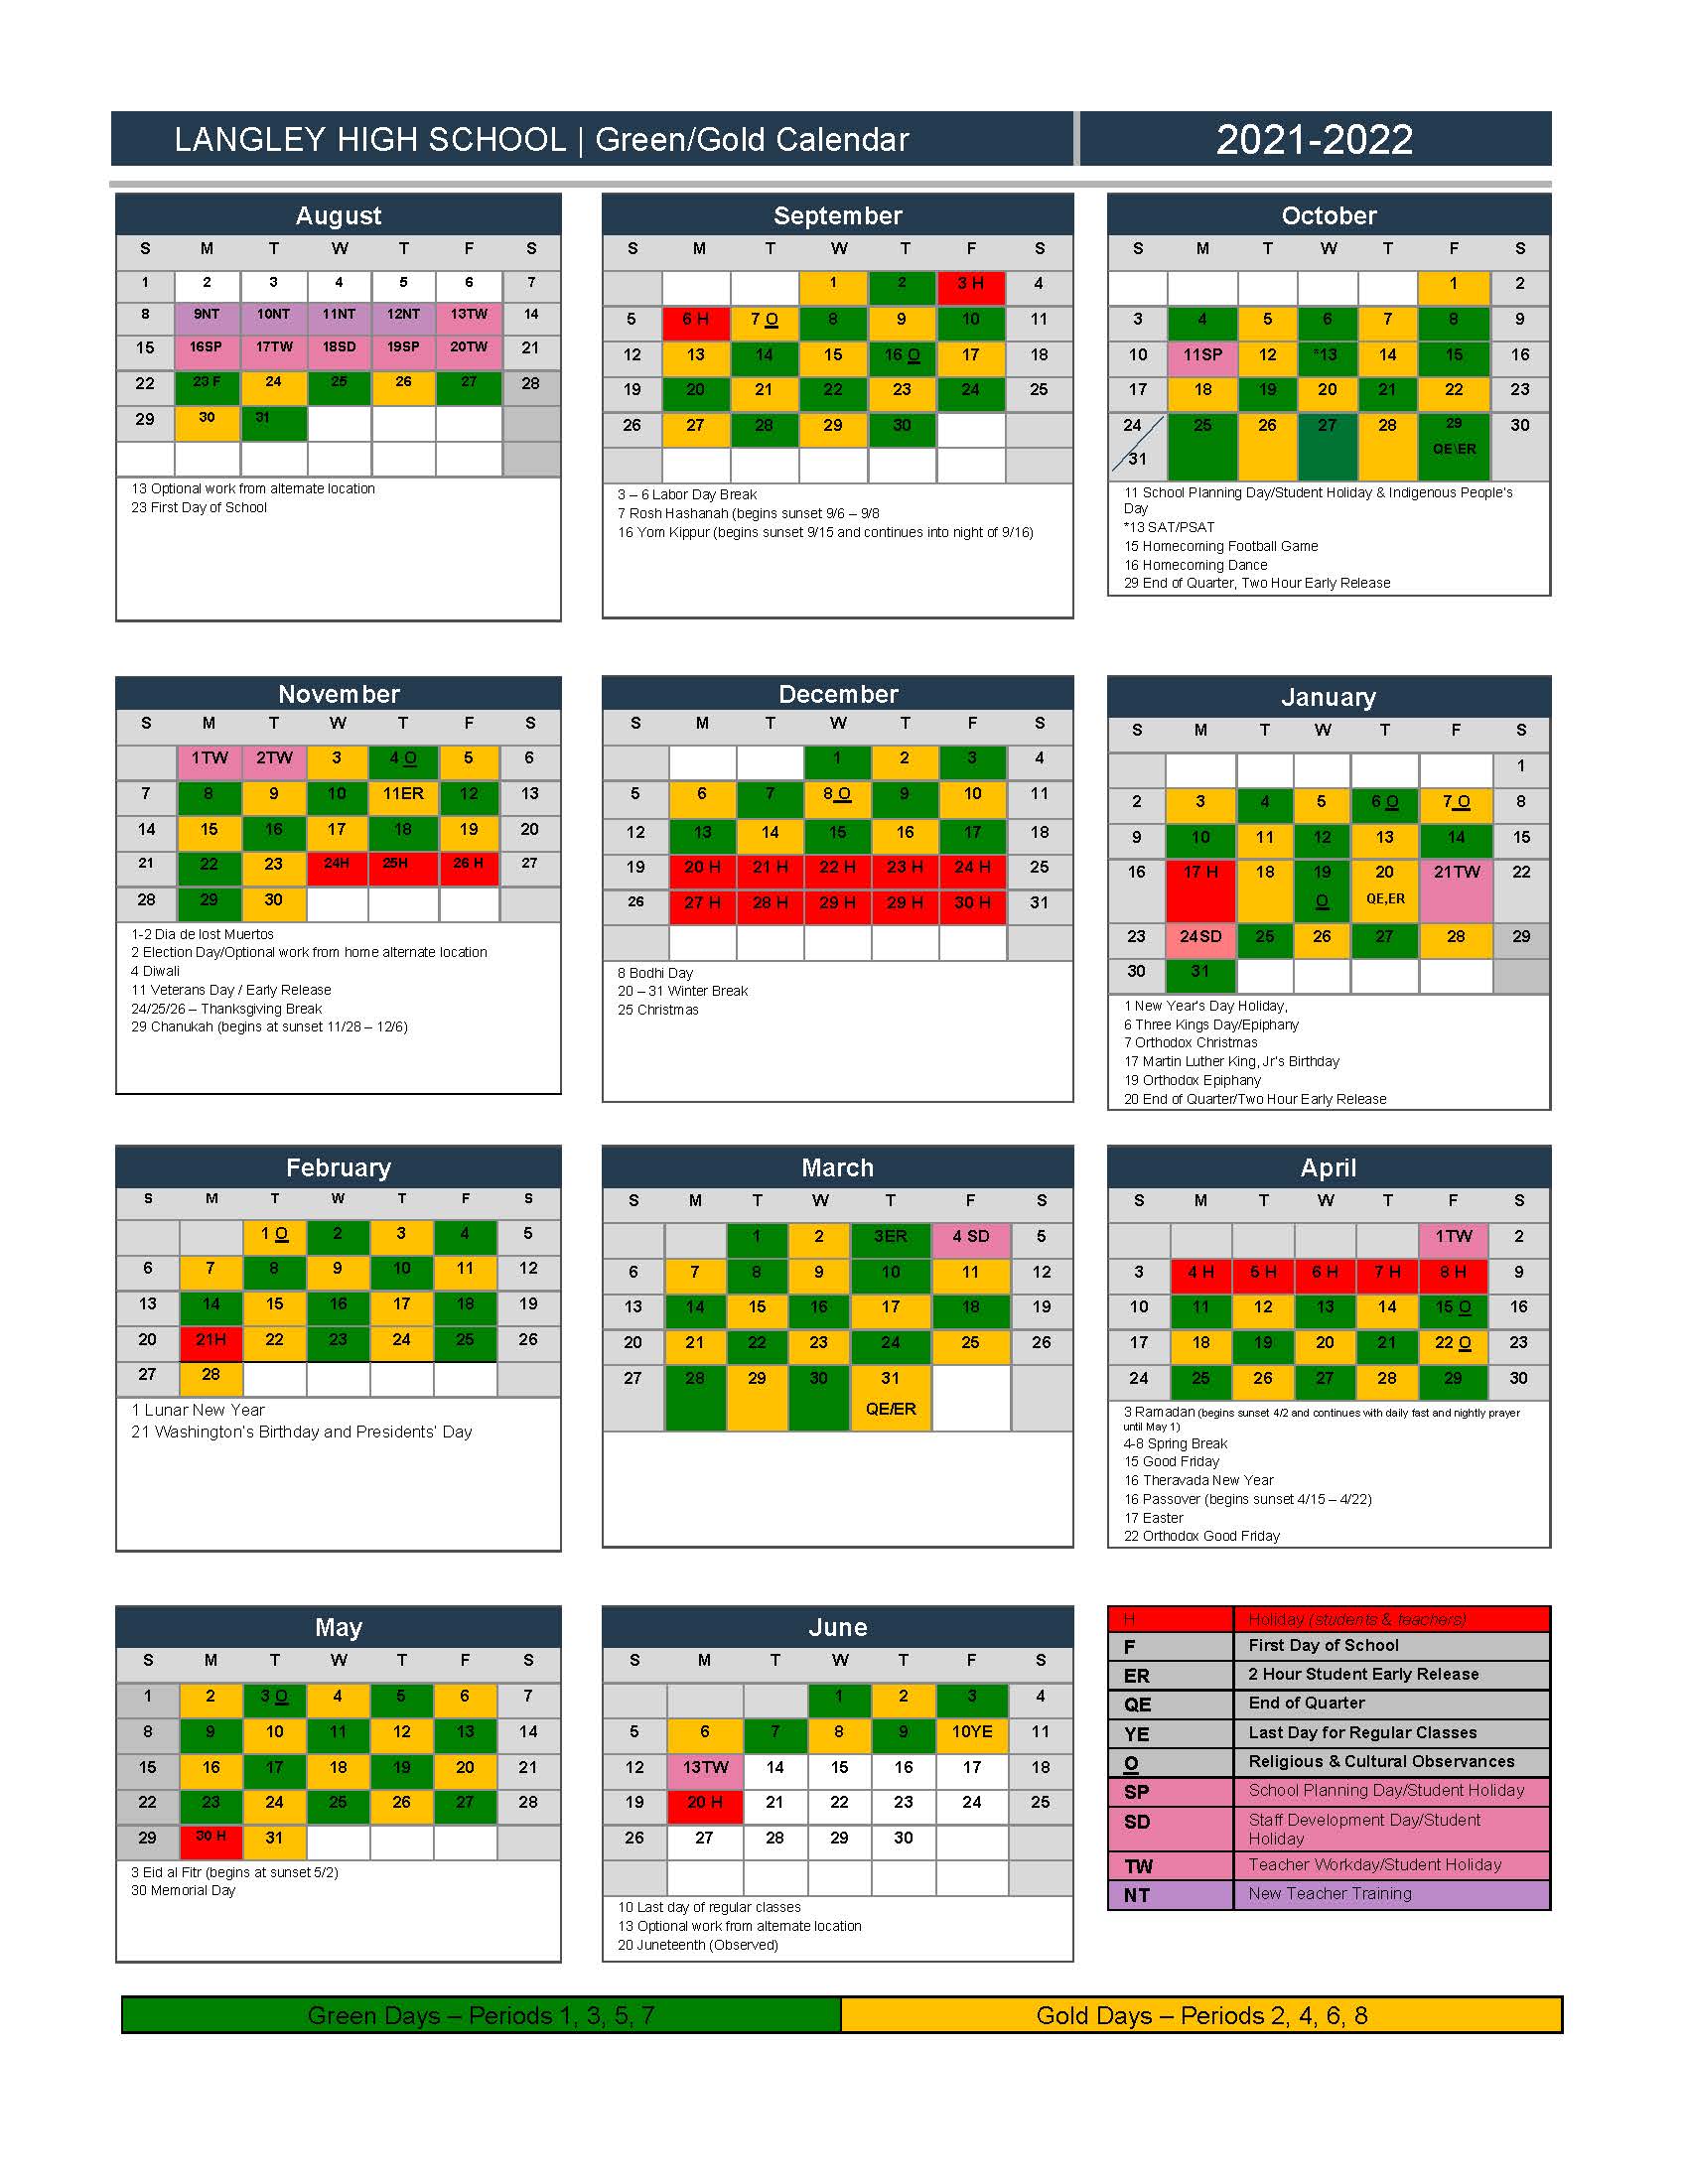 Green/Gold Schedule